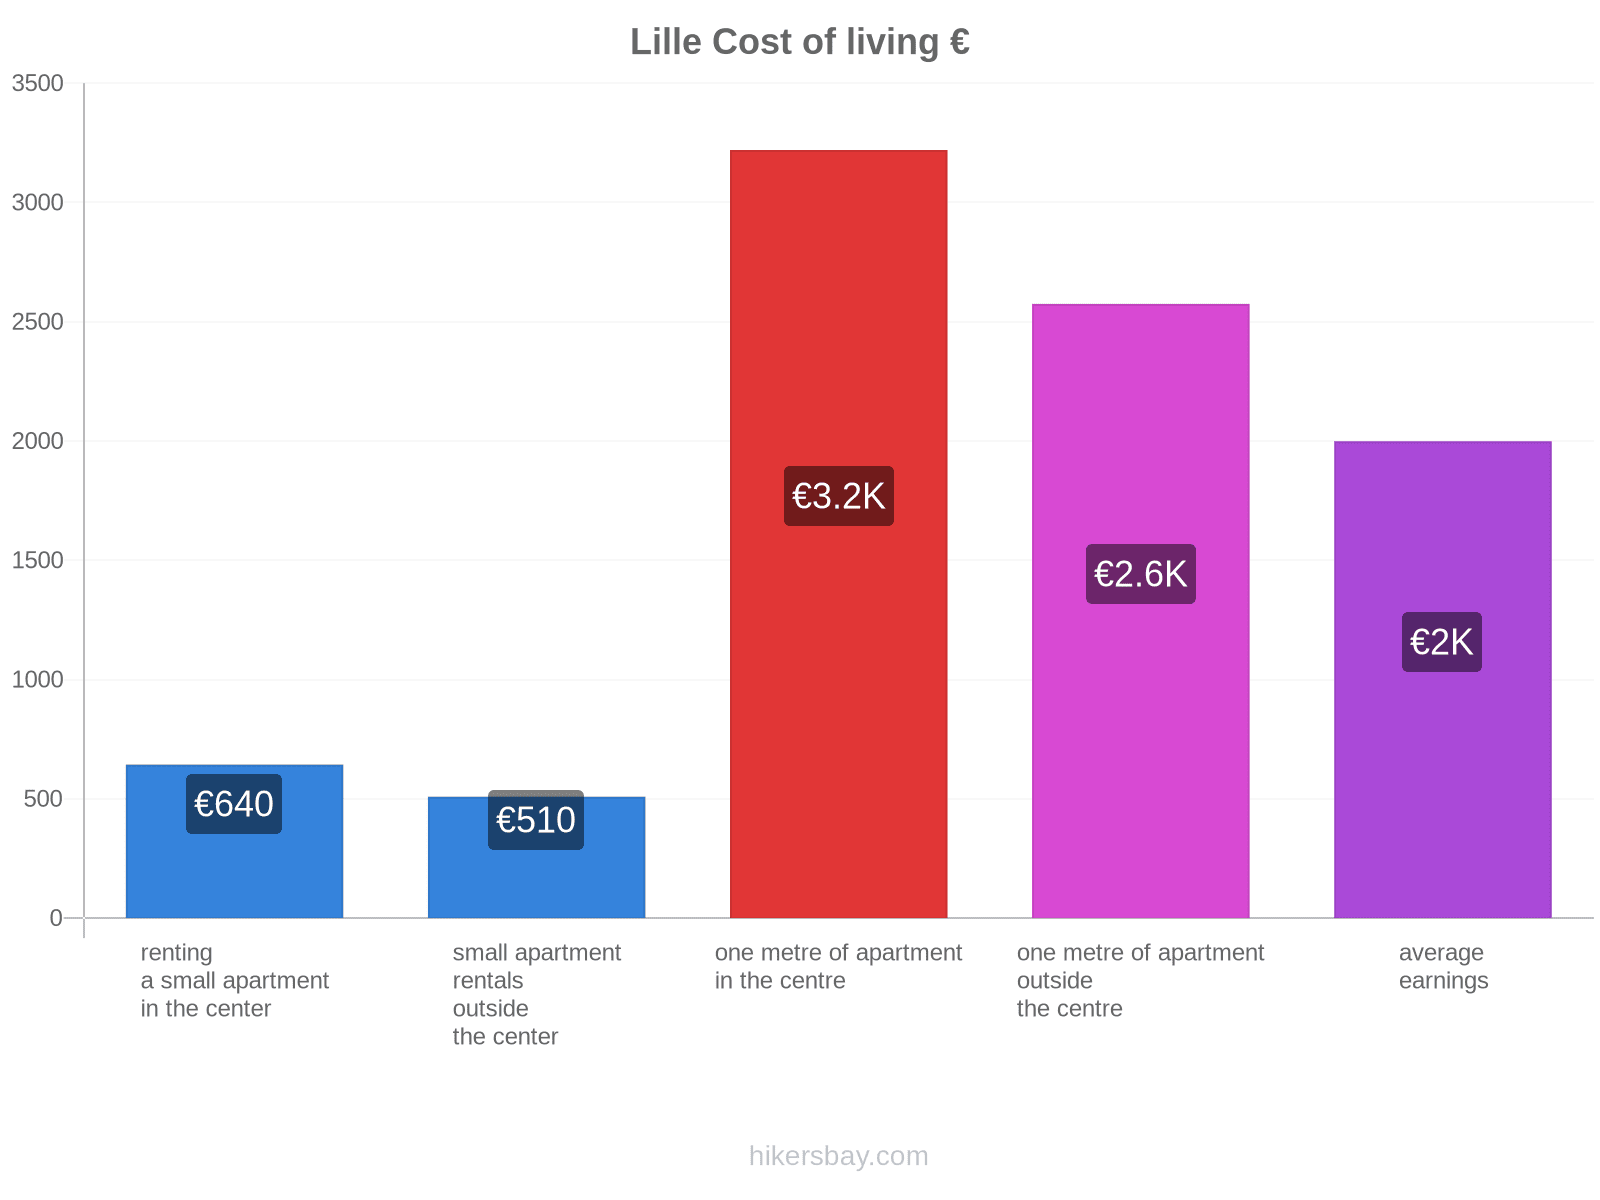 Lille cost of living hikersbay.com